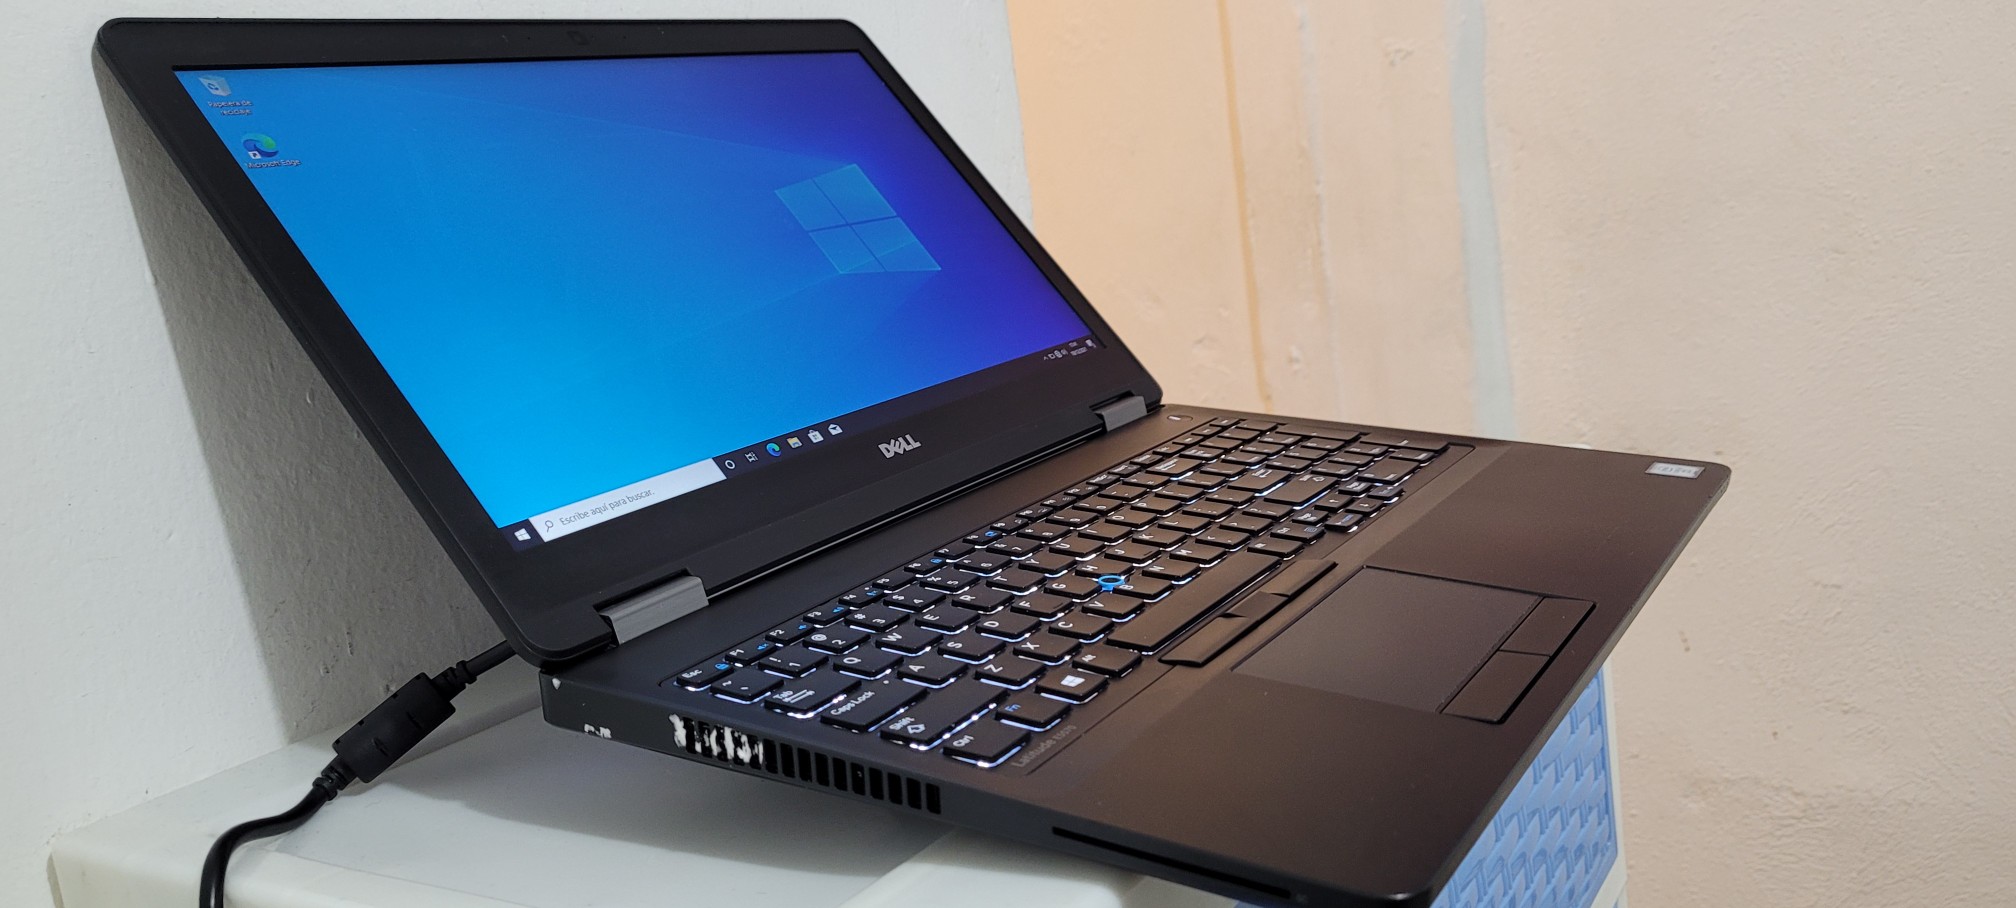 computadoras y laptops - Laptop Dell 17 Pulg Core i7 Ram 12gb Disco SSD Video 6gb 1